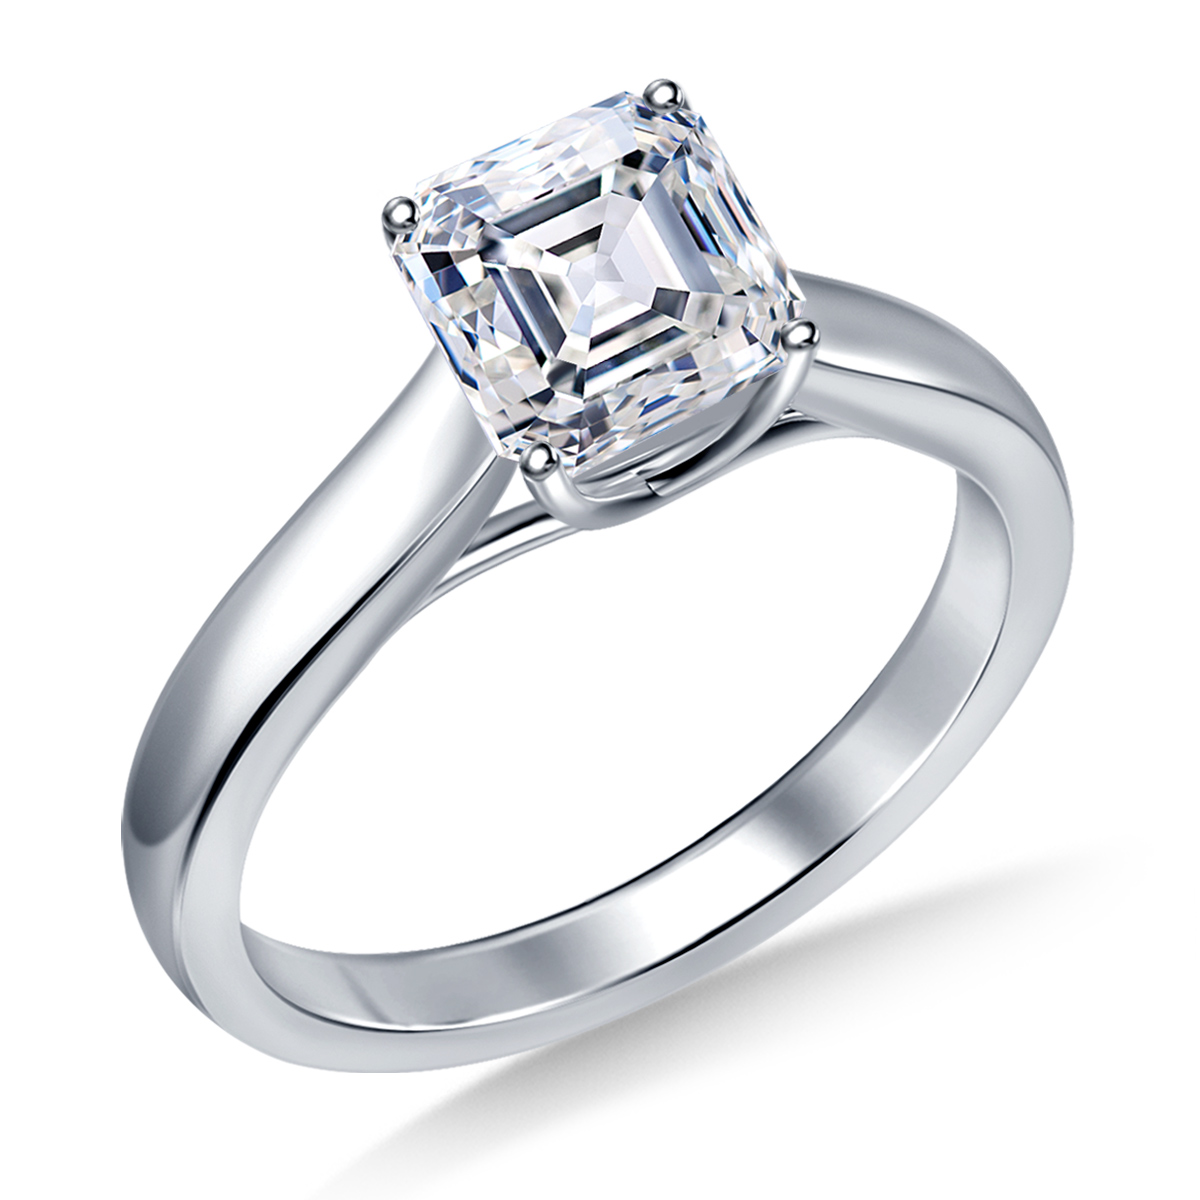 Trellis Princess Cut Solitaire Diamond Engagement Ring in 14K White Gold